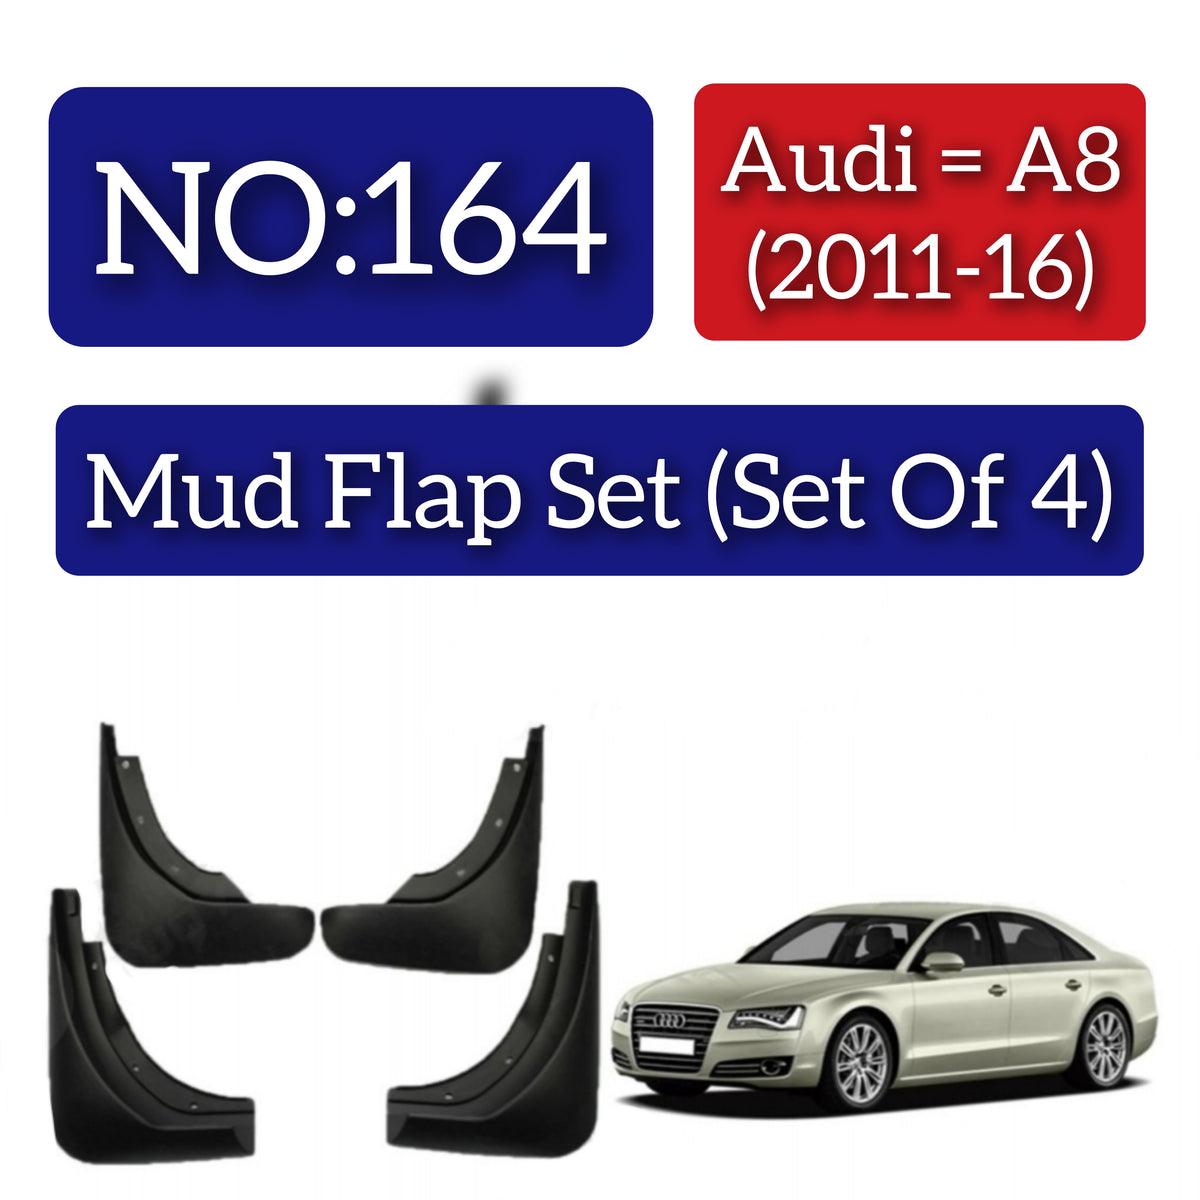 Audi A8 (2011-16) Mud Flap Set (Set of 4) Tag 164